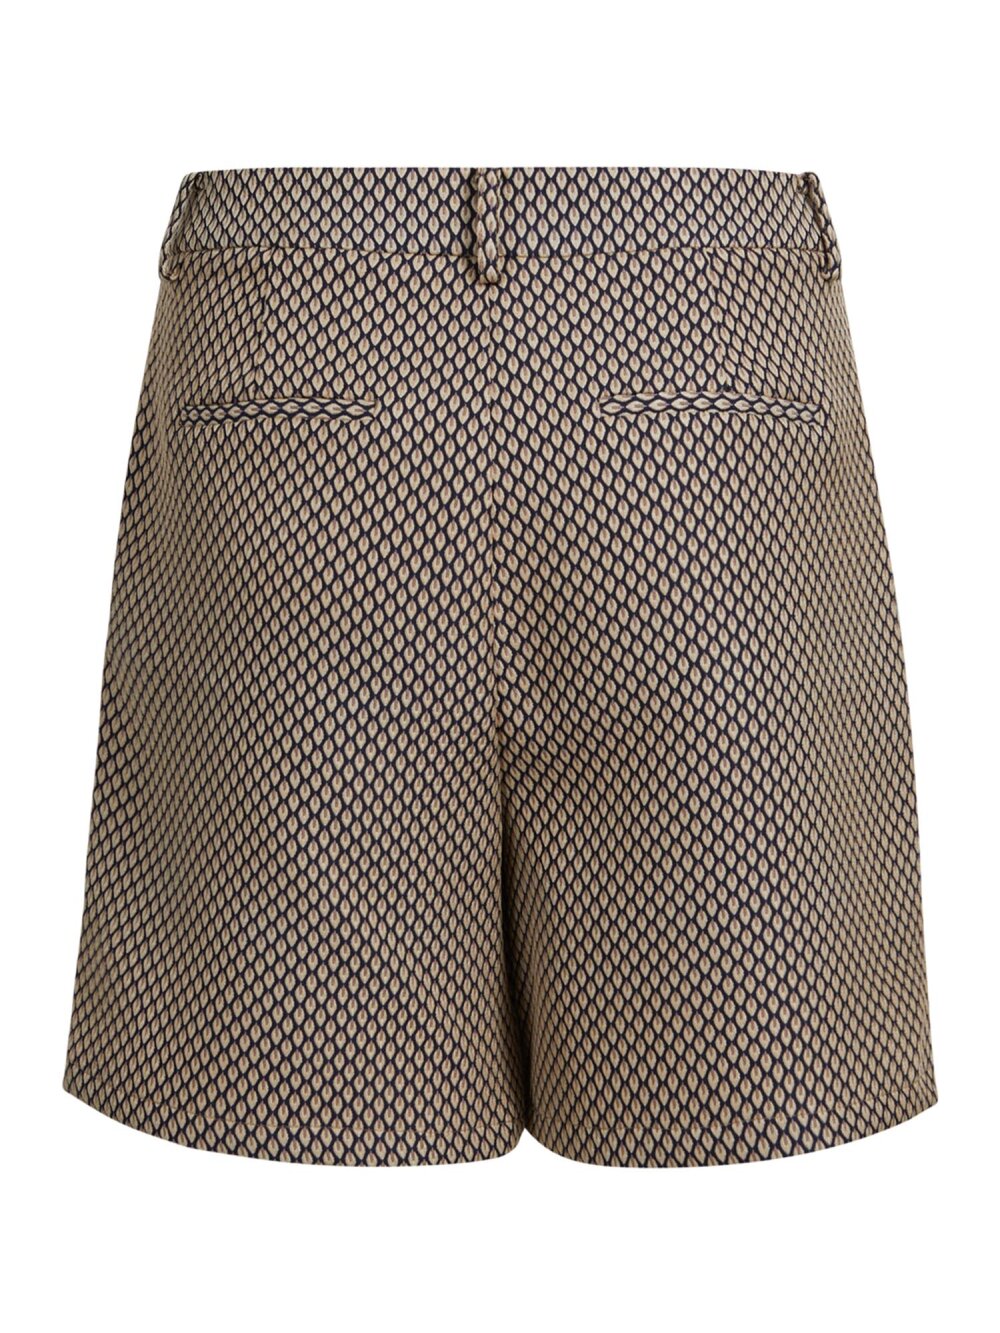 Coster Copenhagen - Shorts in jaquard